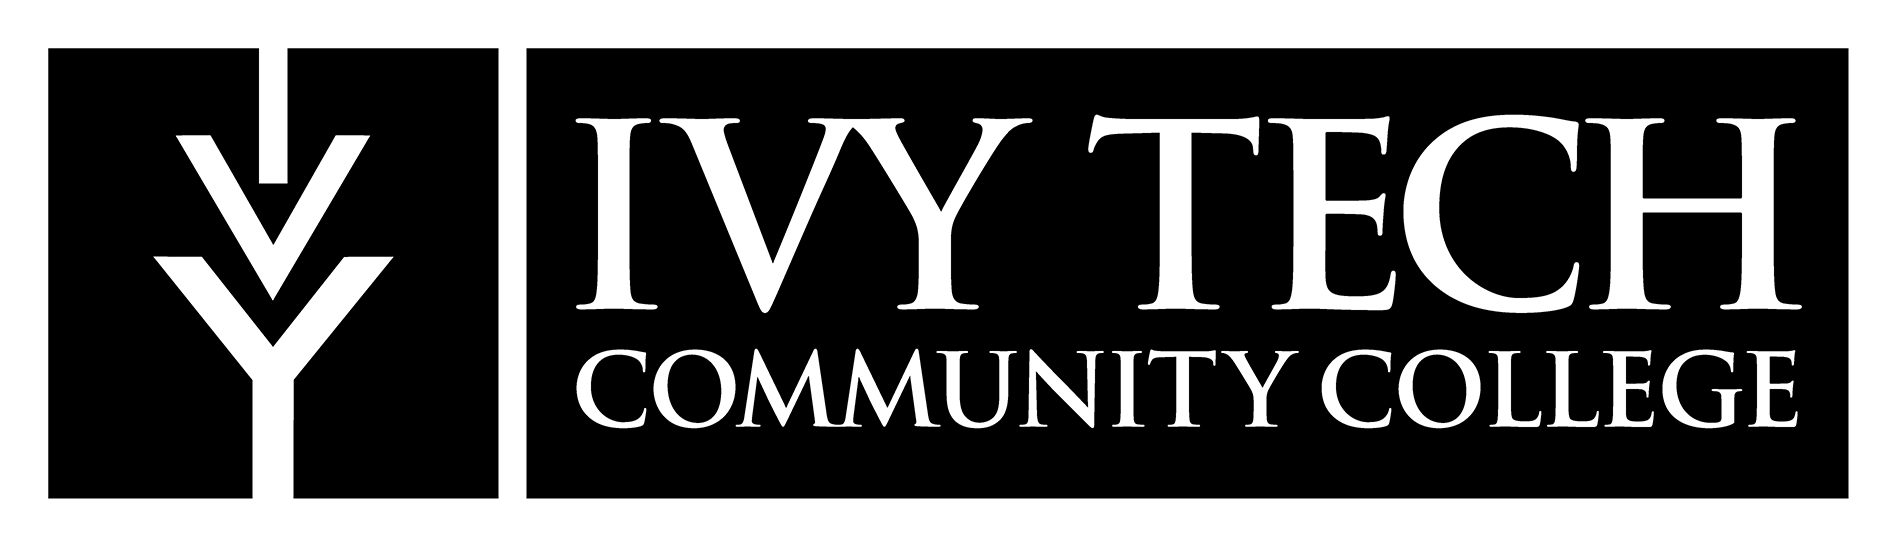 White Indiana Logo - Logos - Ivy Tech Community College of Indiana